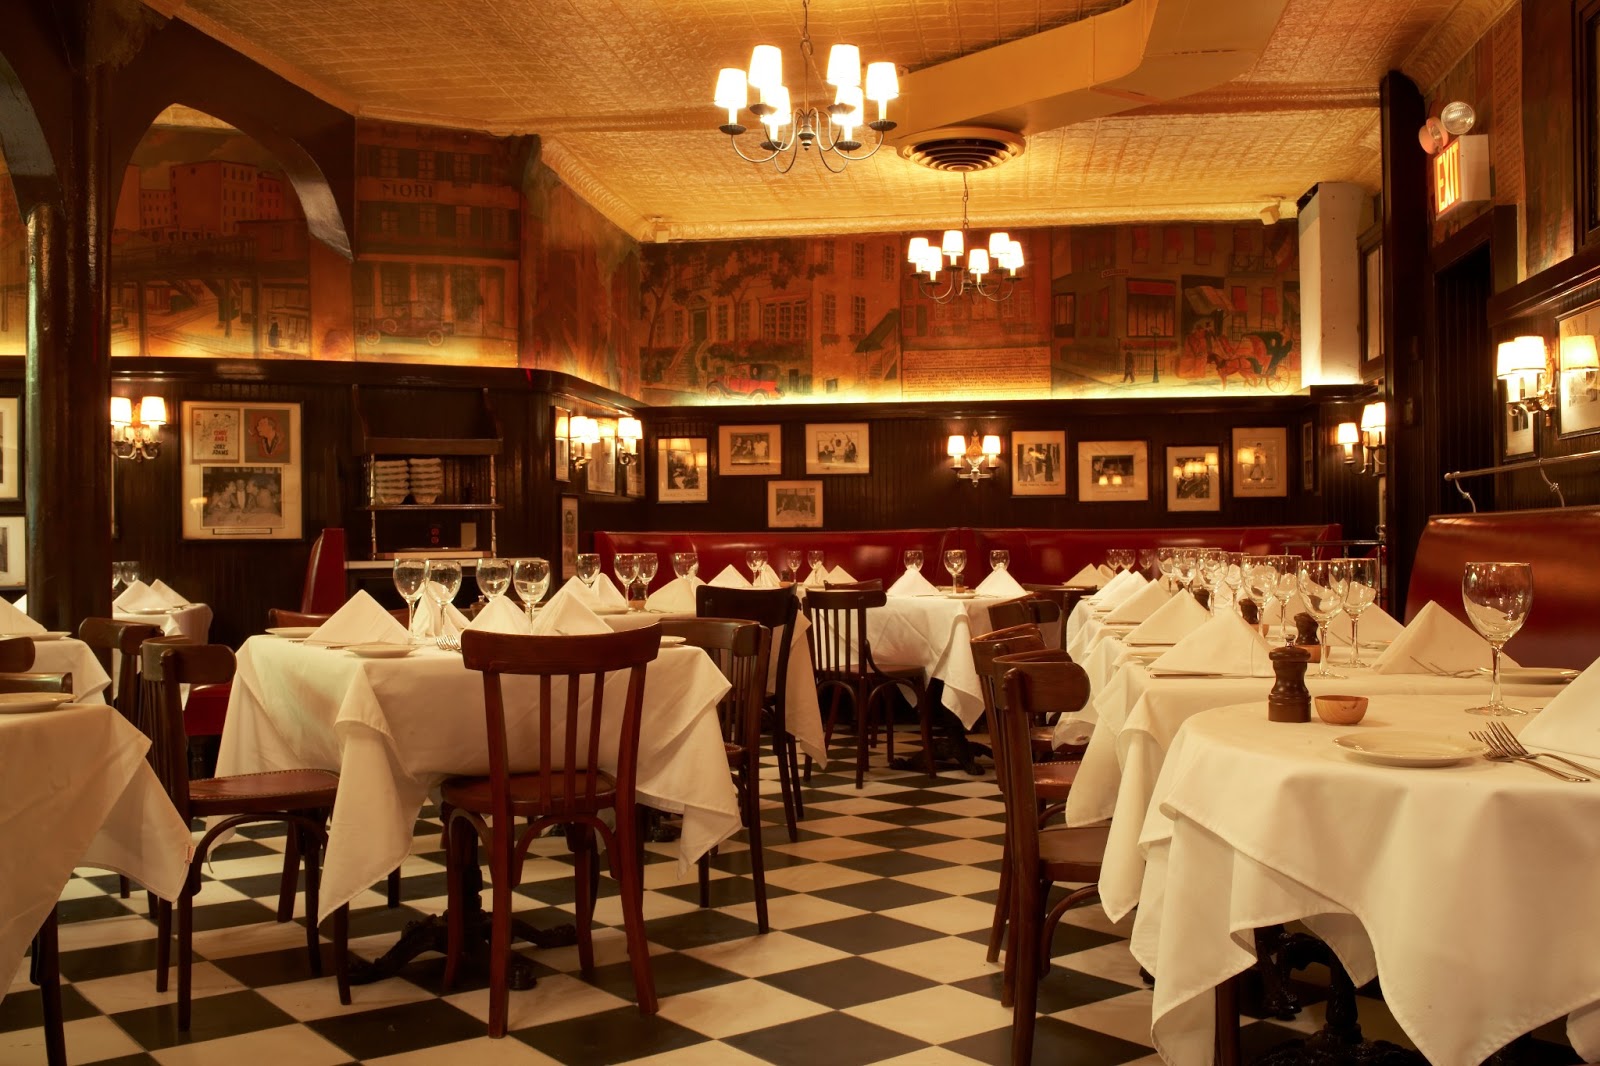 Photo of Minetta Tavern in New York City, New York, United States - 2 Picture of Restaurant, Food, Point of interest, Establishment, Bar